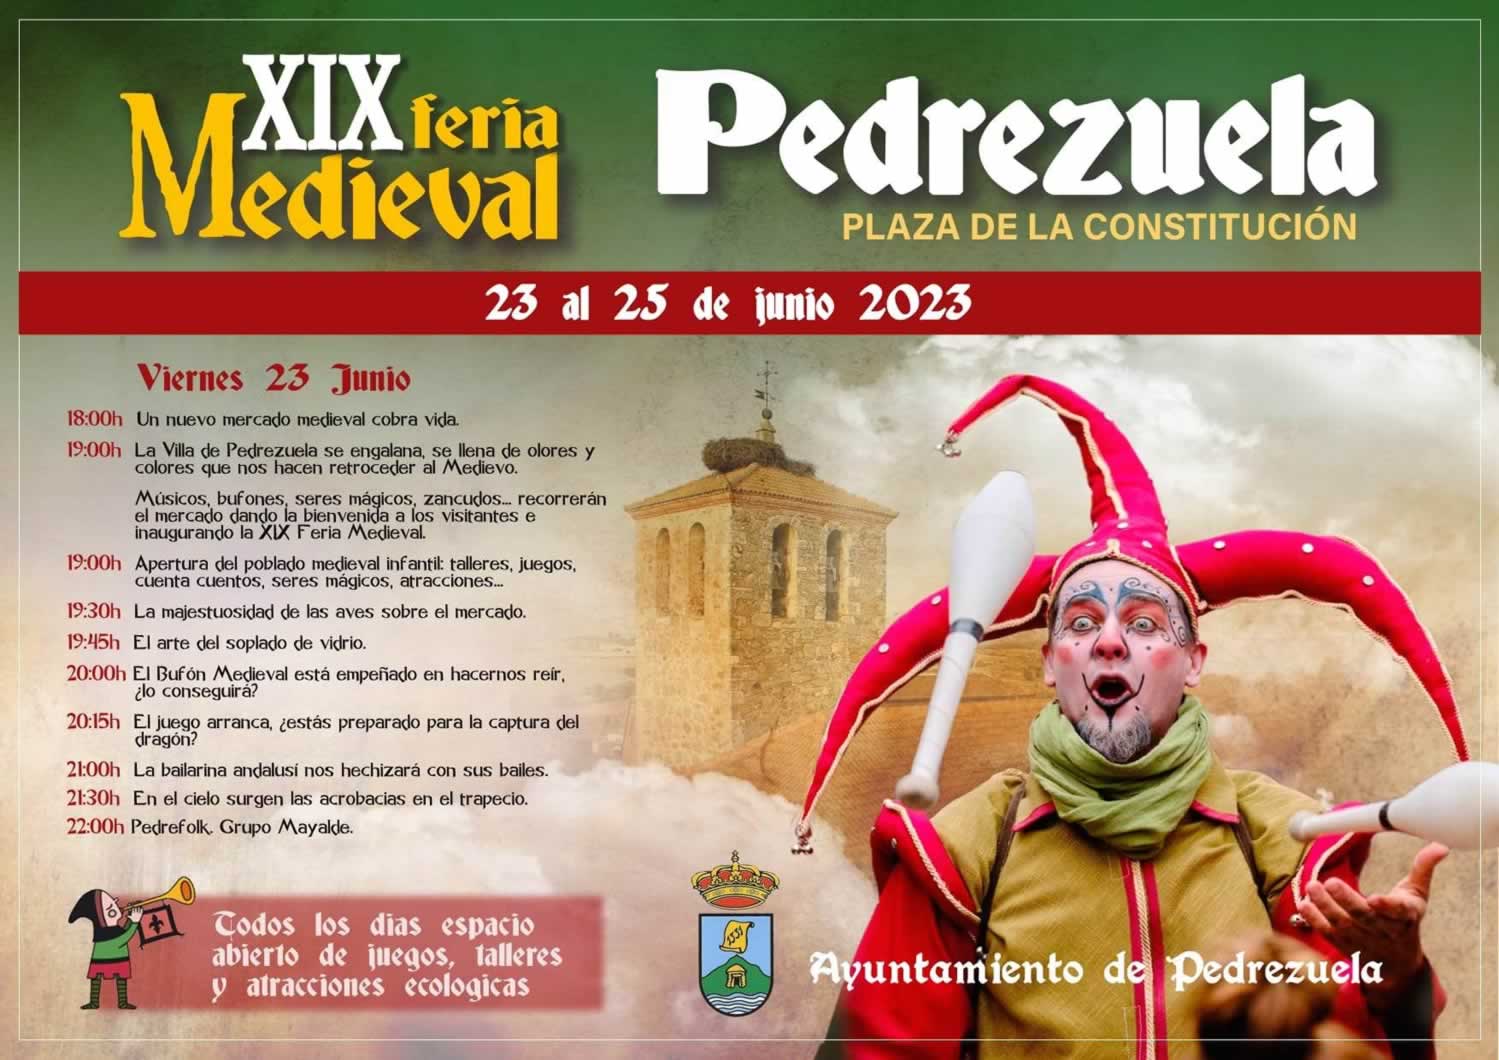 XIX Feria medieval en Pedrezuela, Madrid p1 